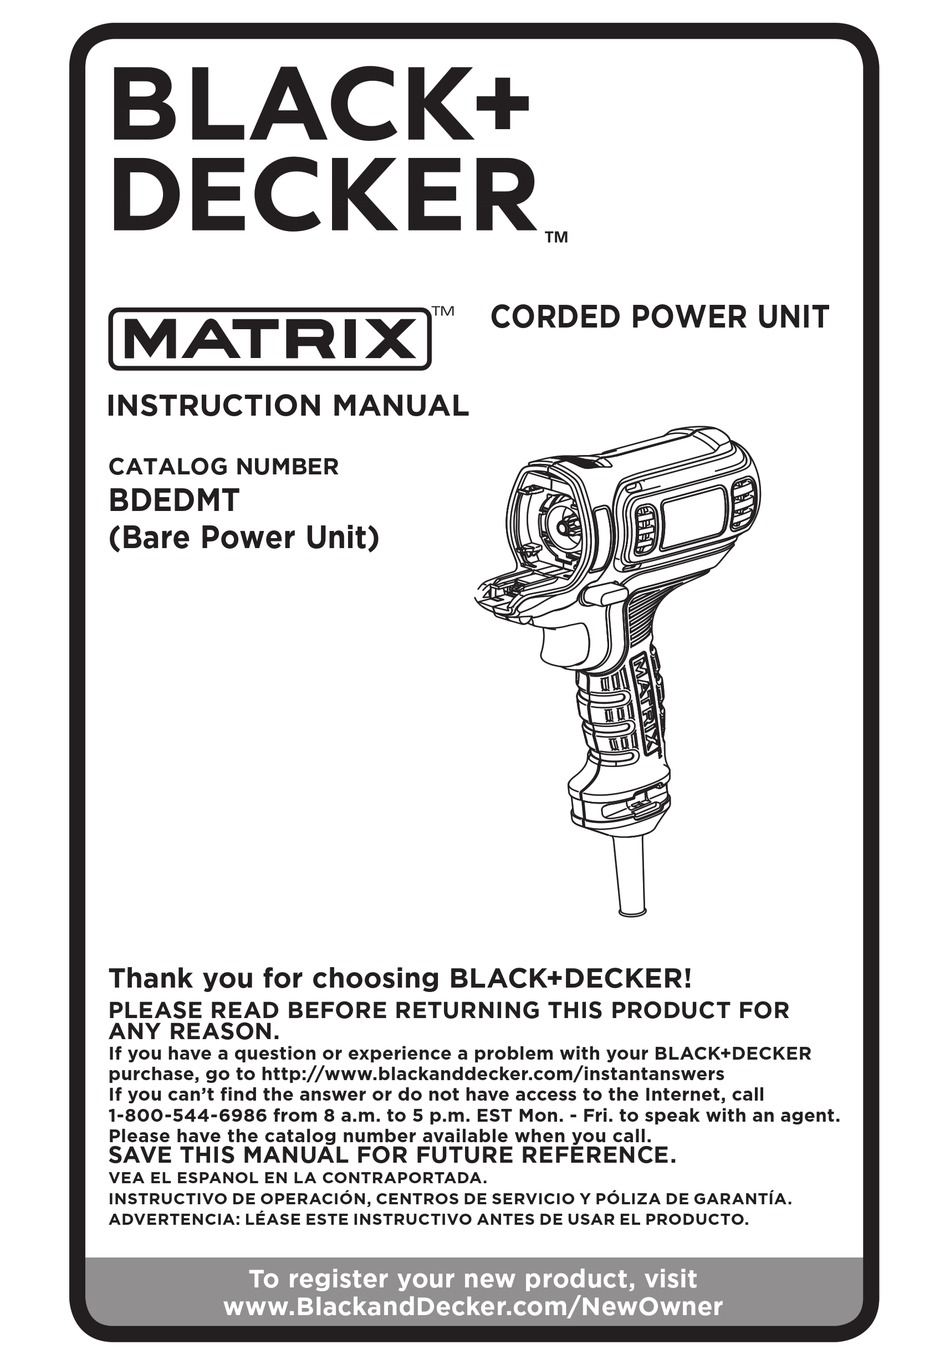 https://data2.manualslib.com/first-image/i17/81/8056/805555/black-decker-matrix-bdedmt.jpg